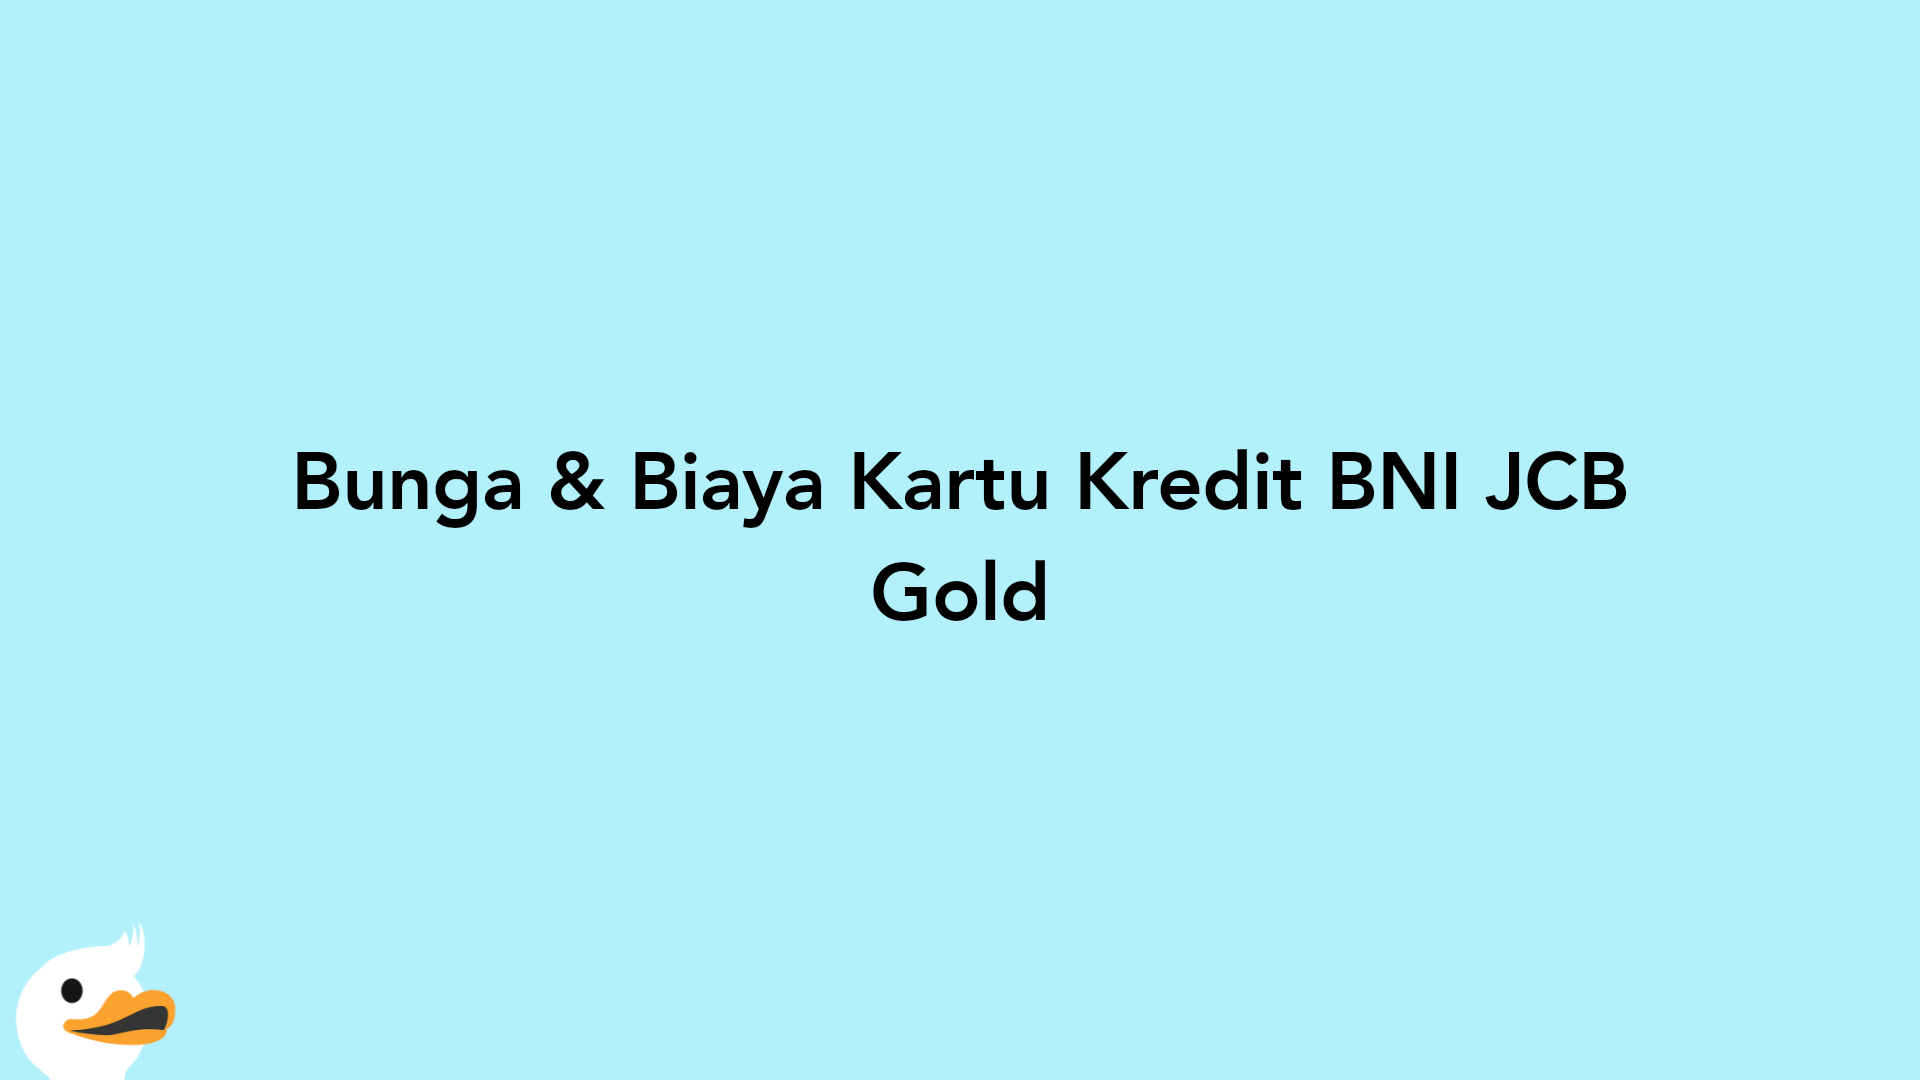 Bunga & Biaya Kartu Kredit BNI JCB Gold